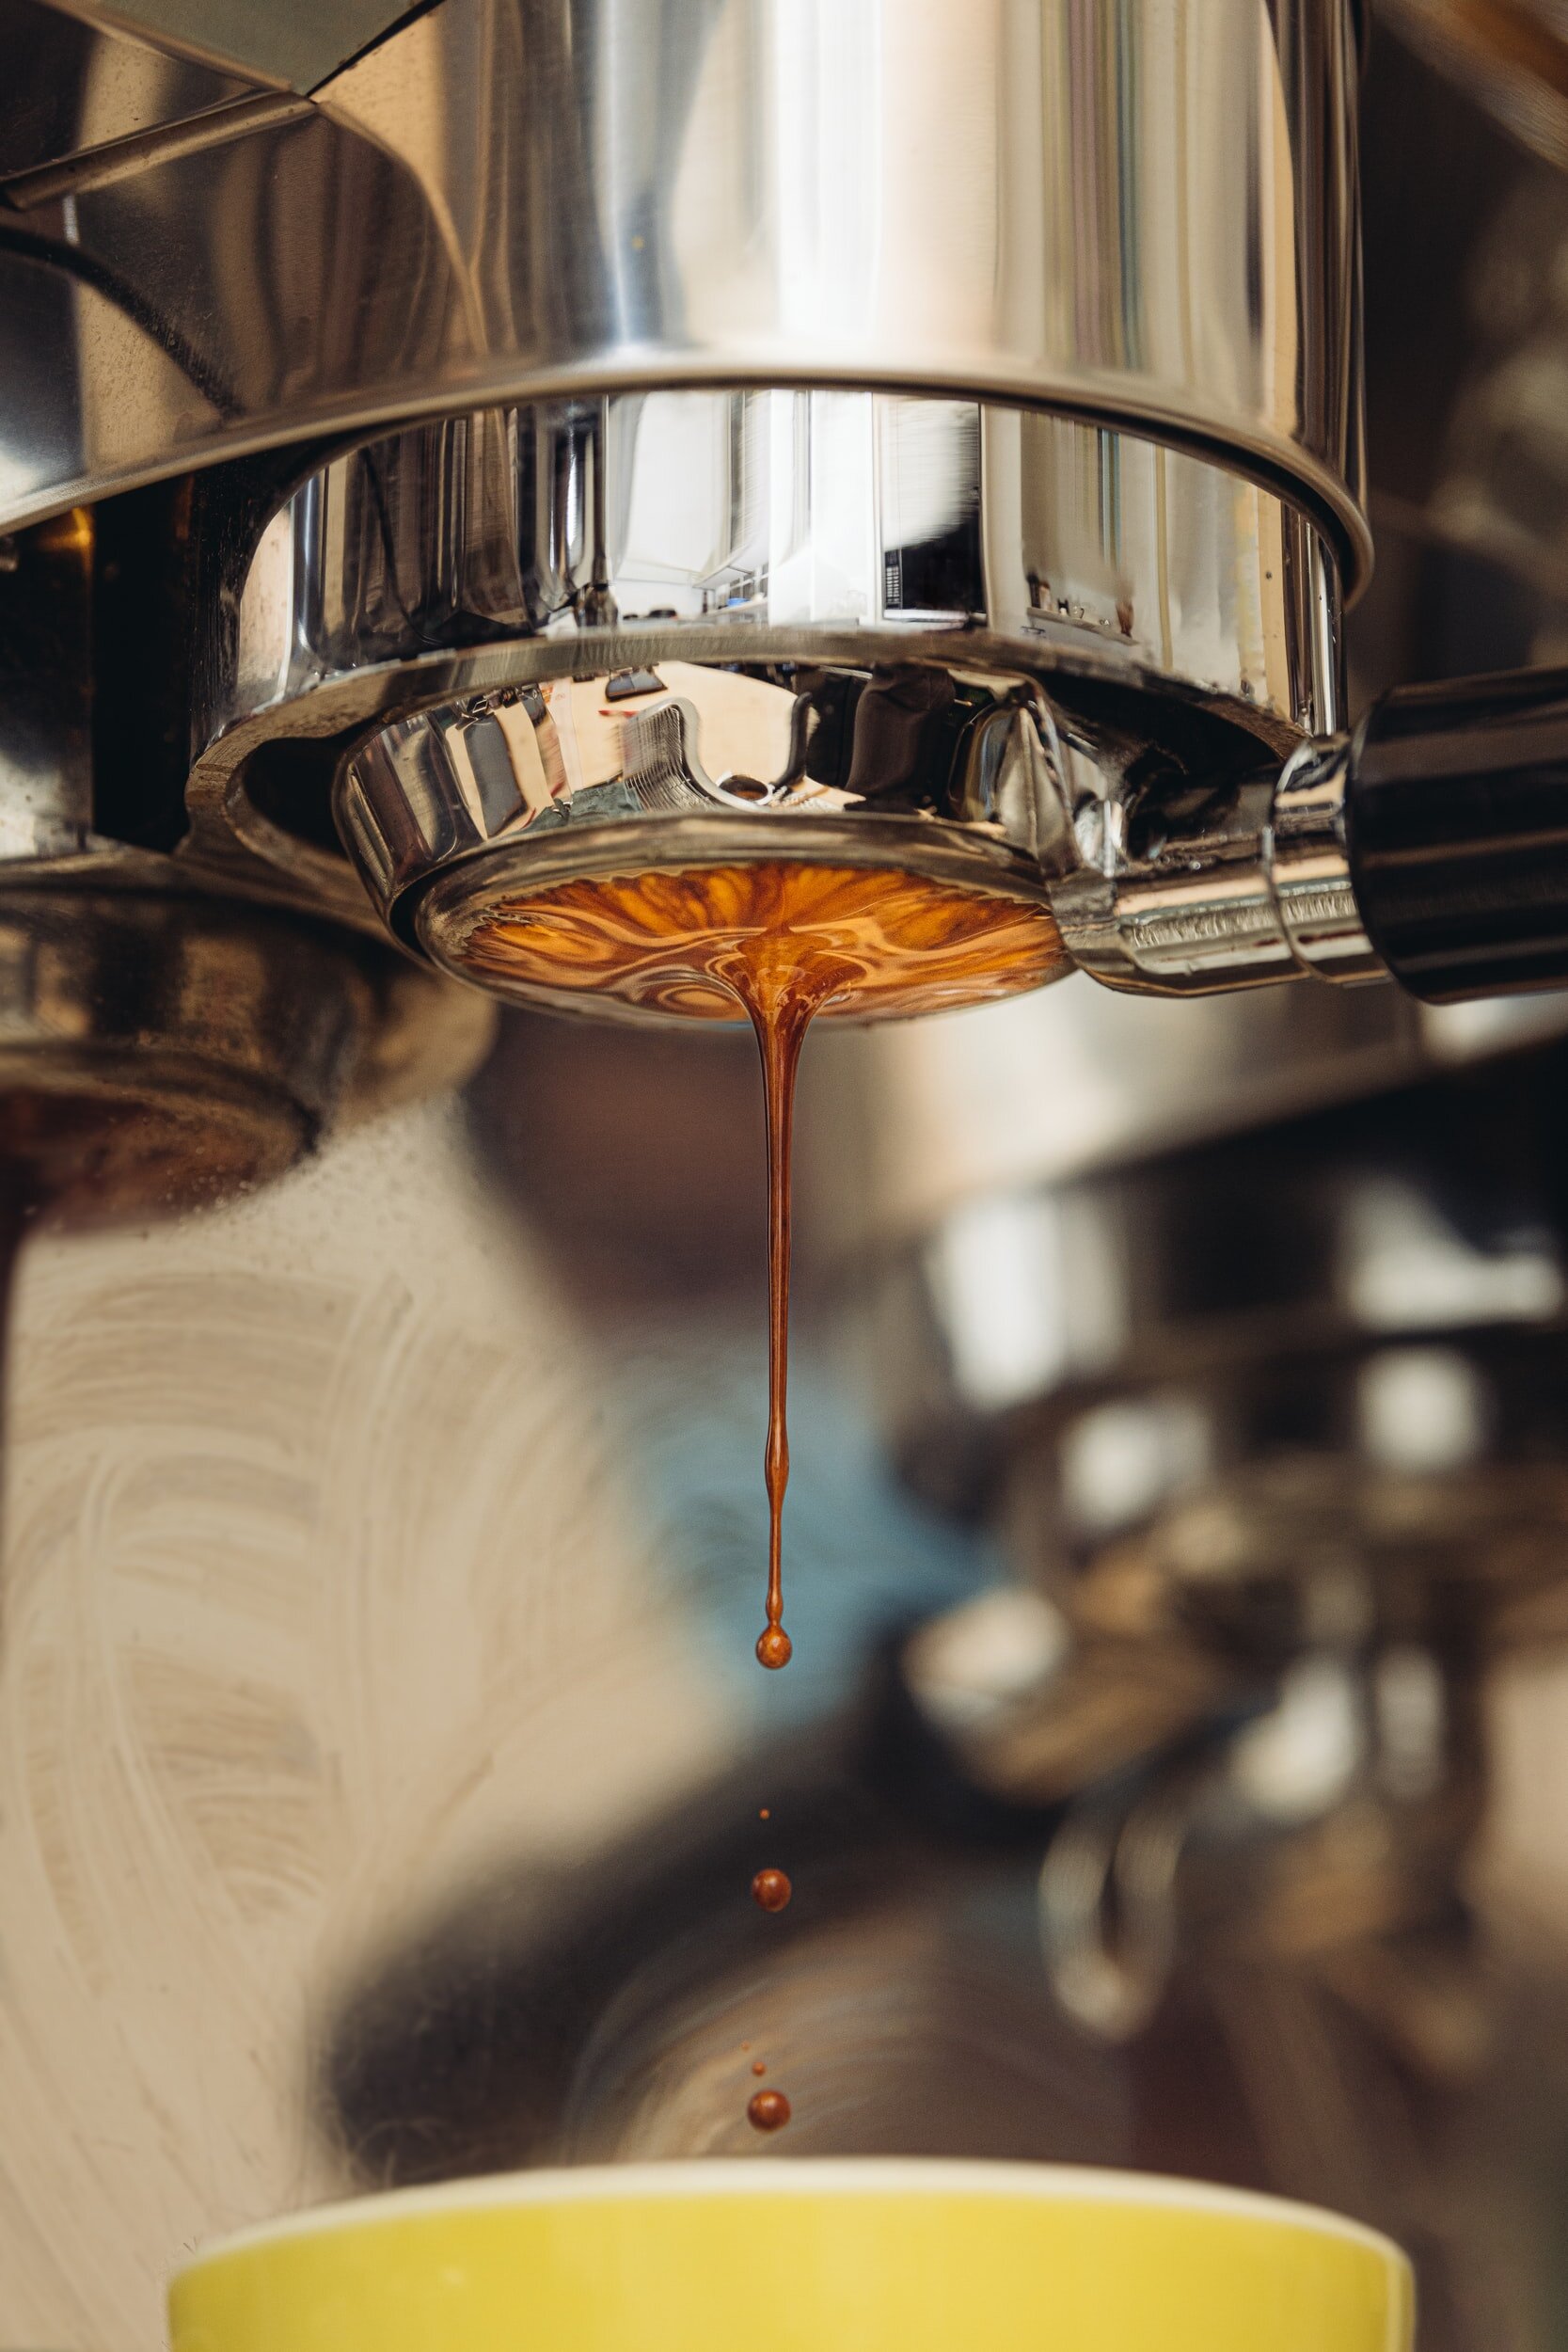 espresso-dripping-from-portafilter